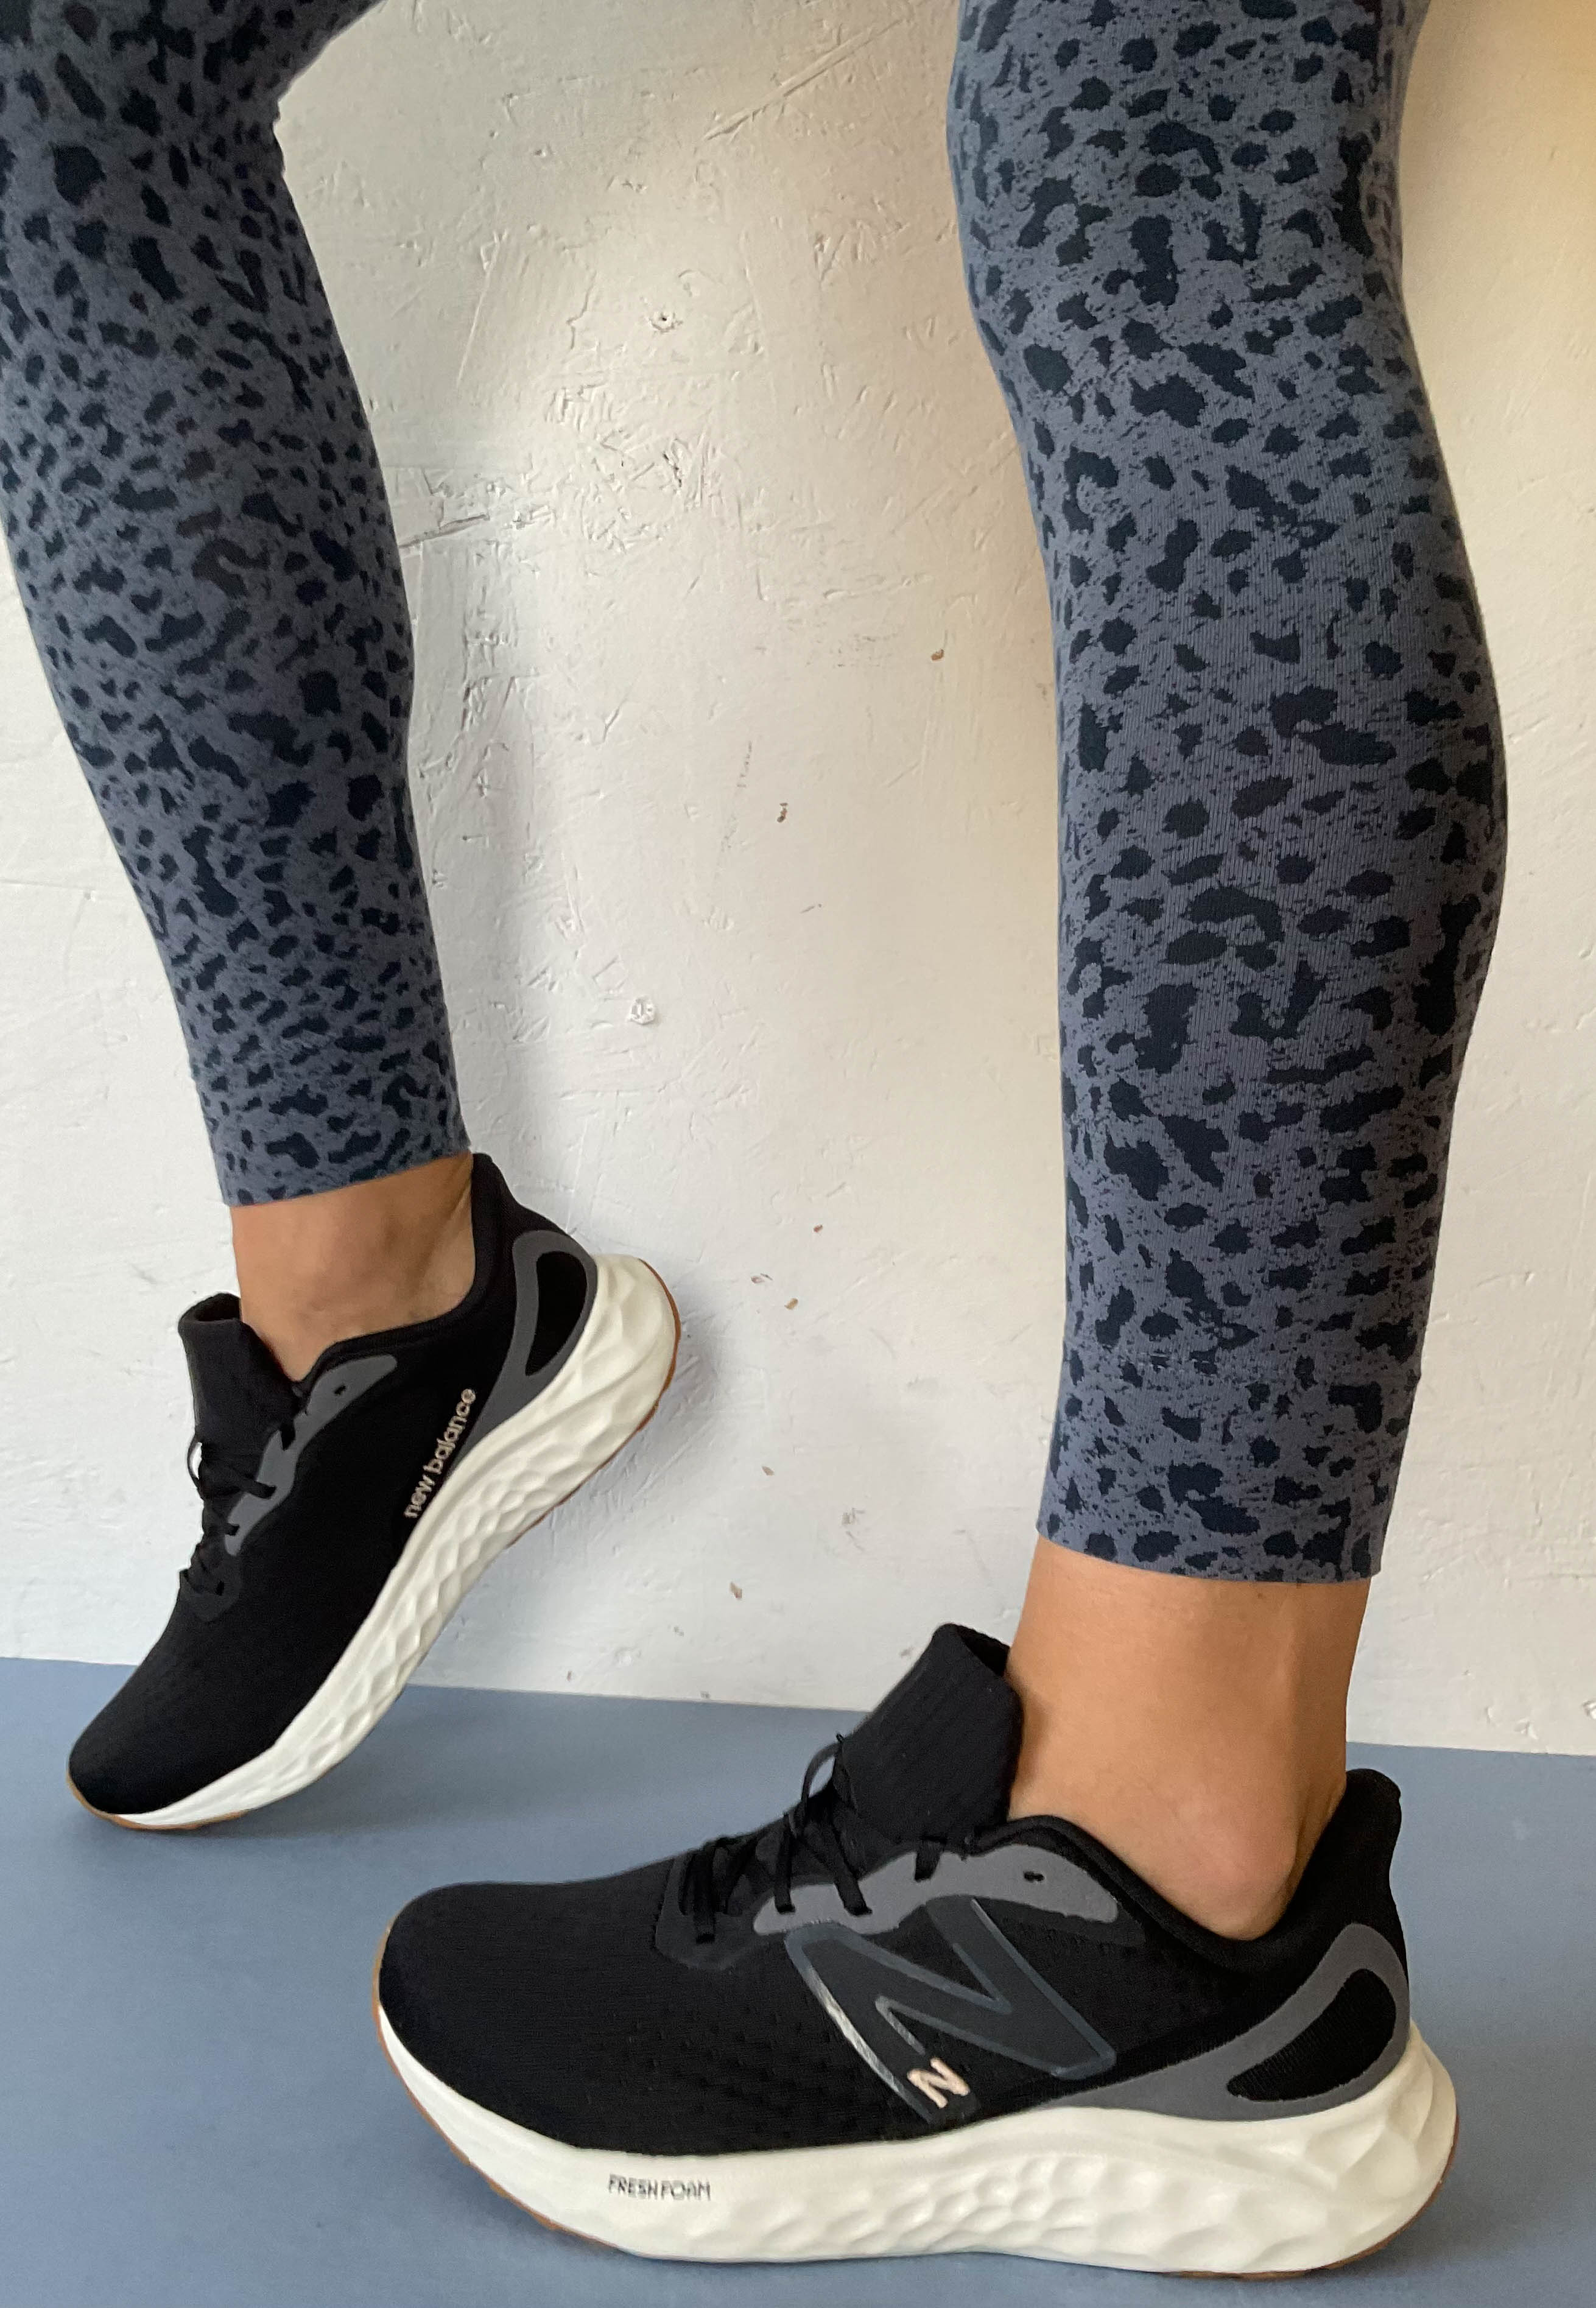 New balance running shoes for women